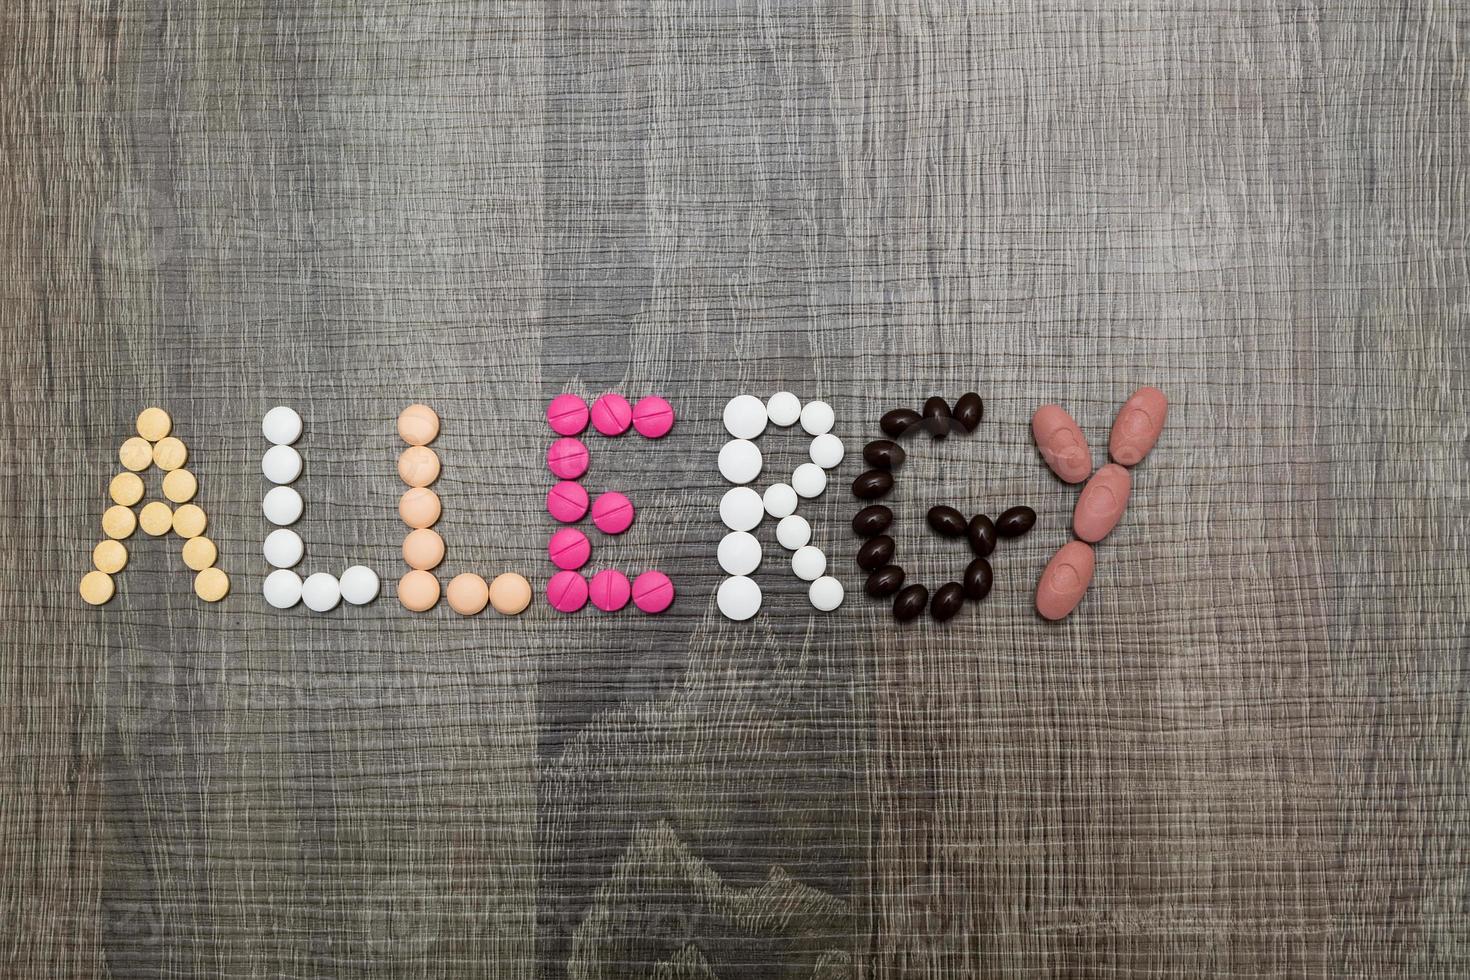 ordet allergi skrivet med piller på en träbakgrund. foto